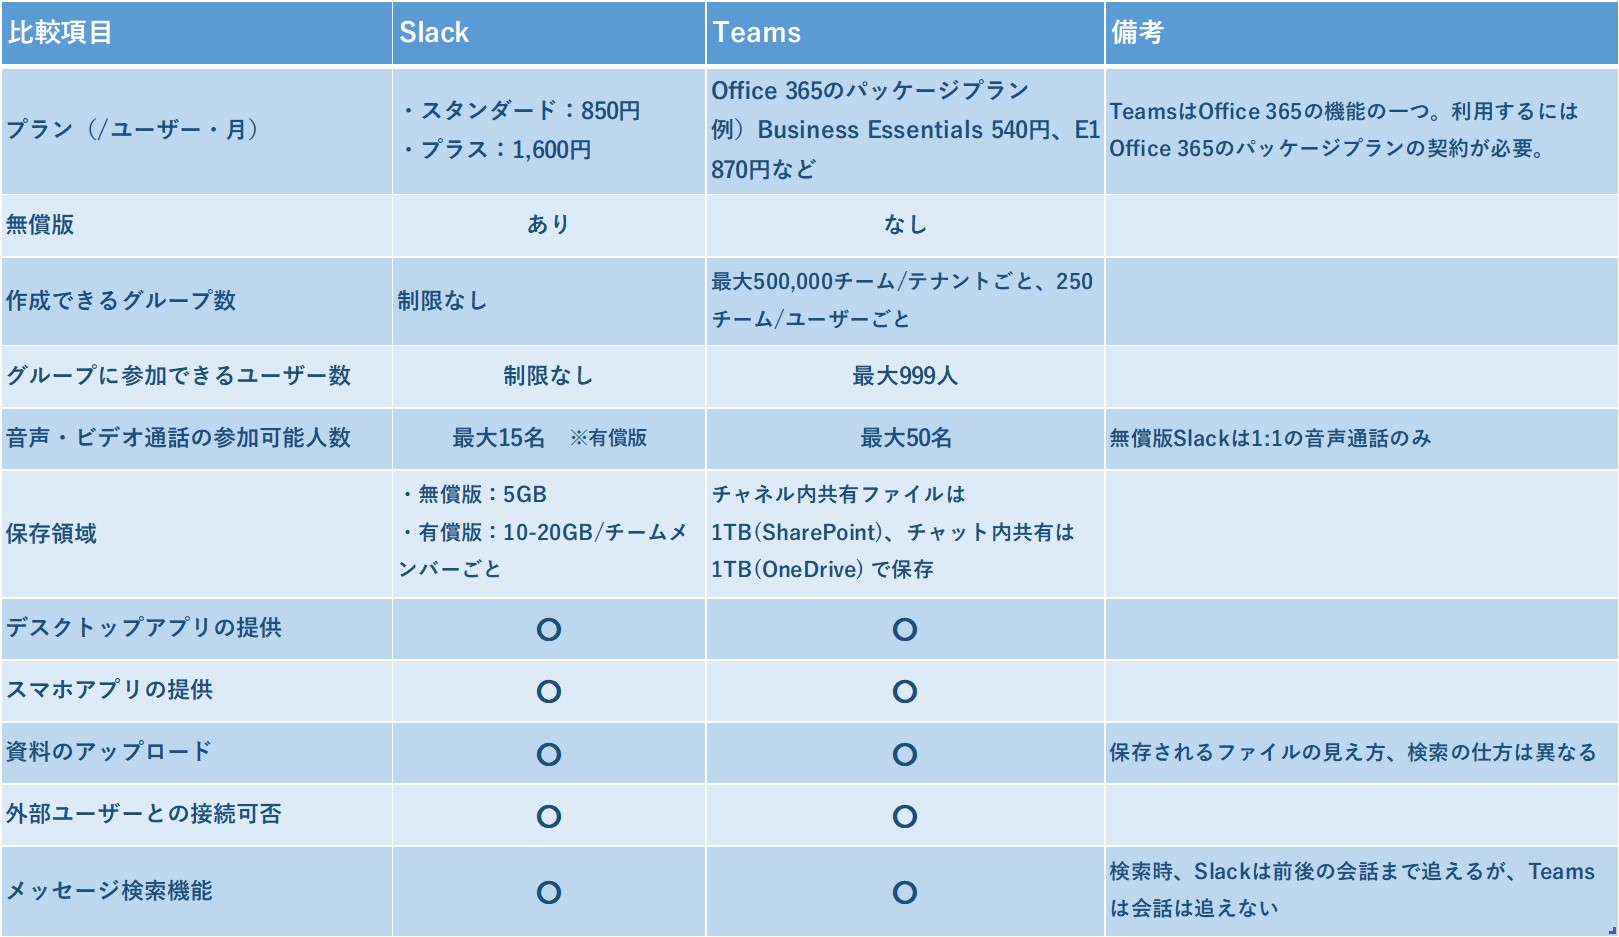 https://licensecounter.jp/office365/blog/compare-slack-teams-matome.jpg